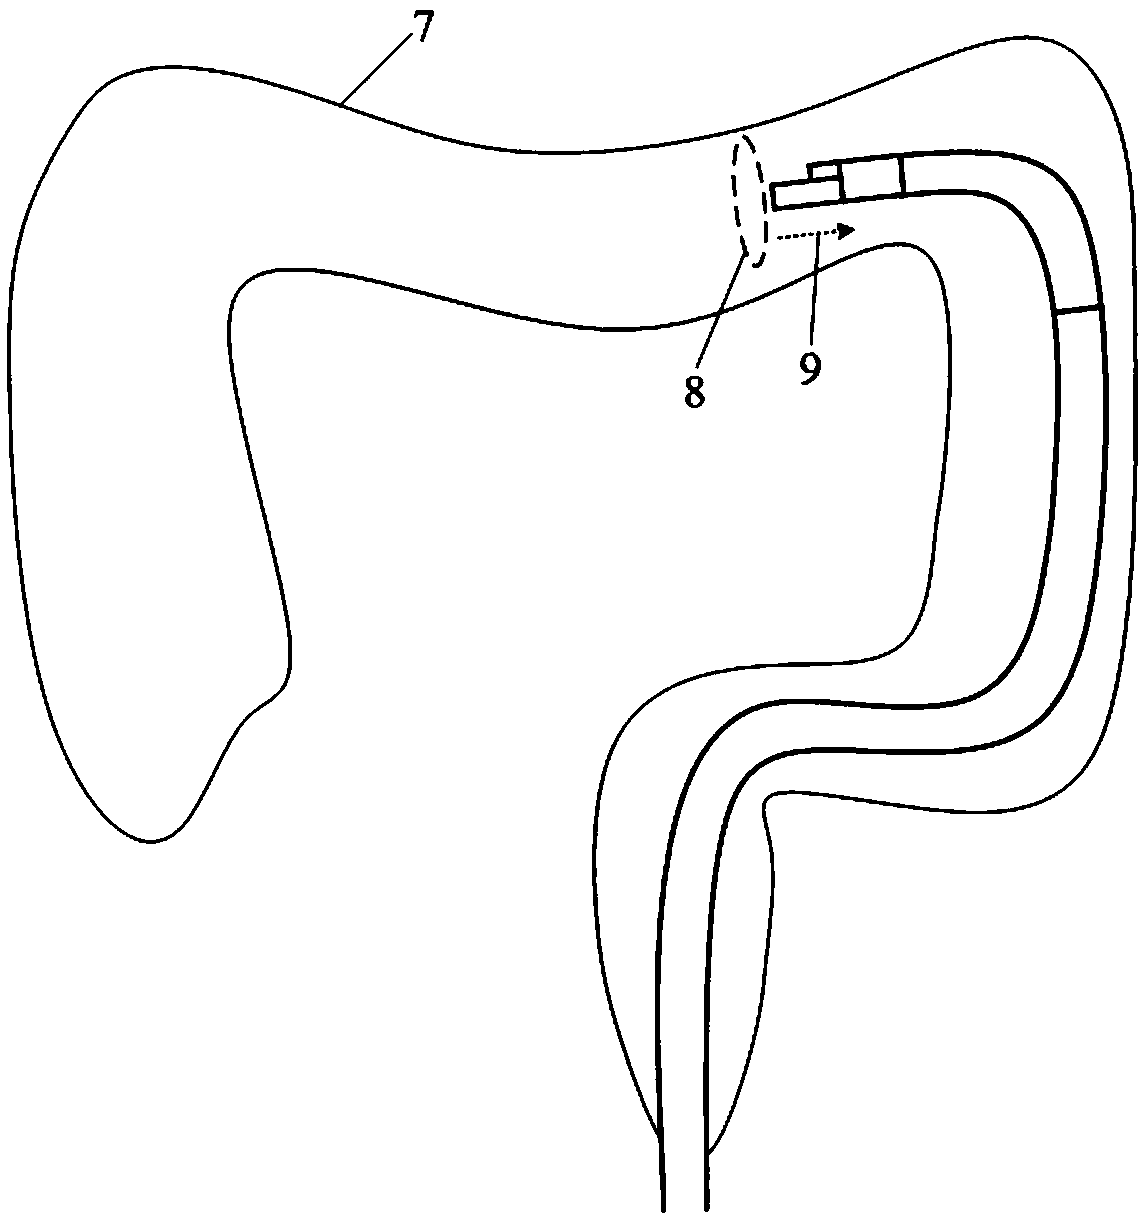 Snake-bone-turning-based bending cavity internal three-dimensional opto-acoustic endoscope and imaging method thereof